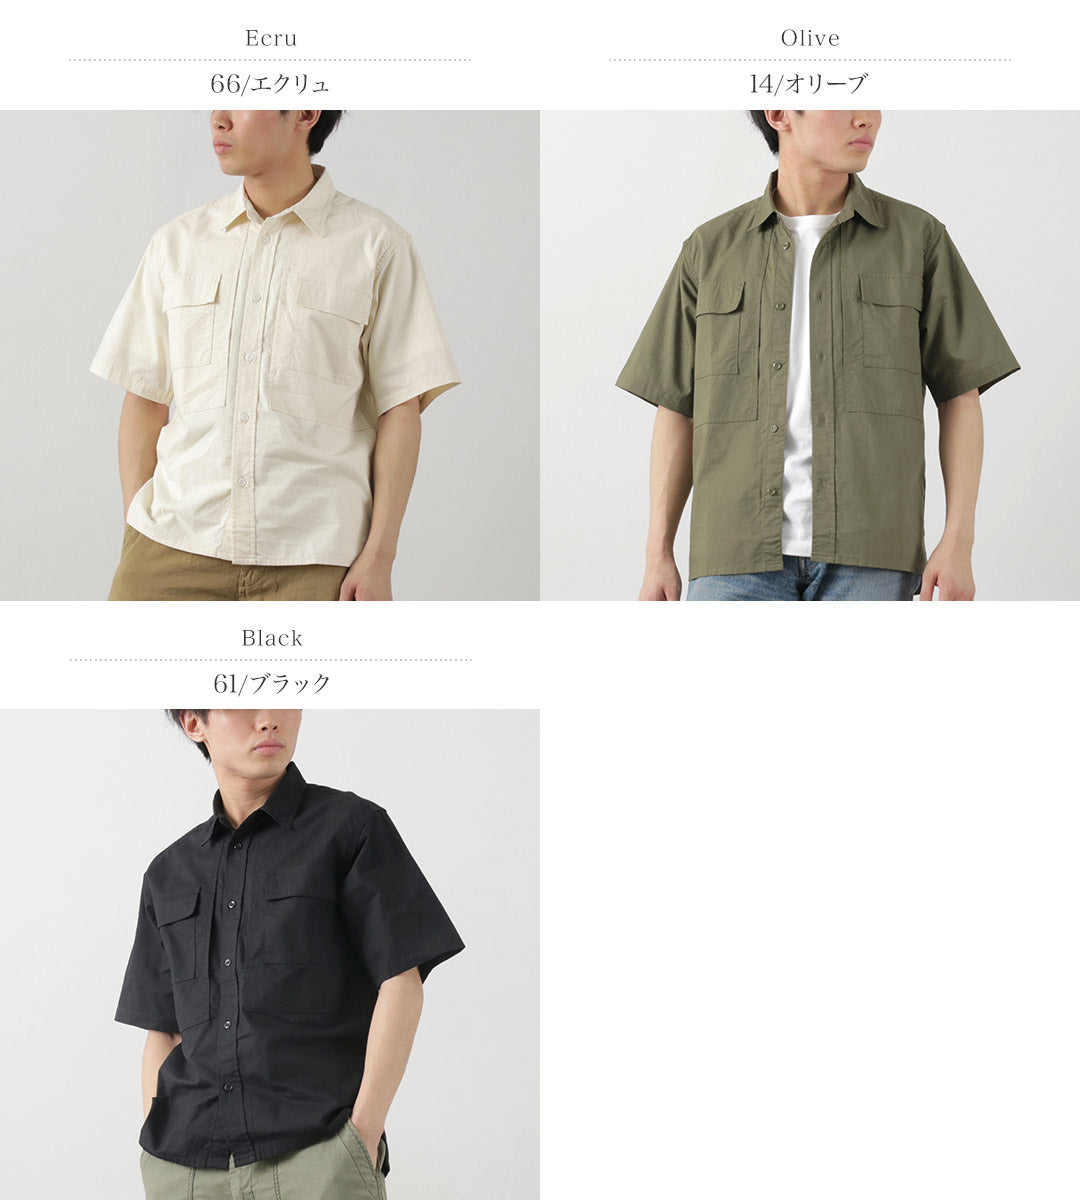 FOB FACTORY（FOBファクトリー） F3499 半袖フィールドシャツ / メンズ  ミリタリーシャツ コットン 綿 日本製 FIELD SHIRT